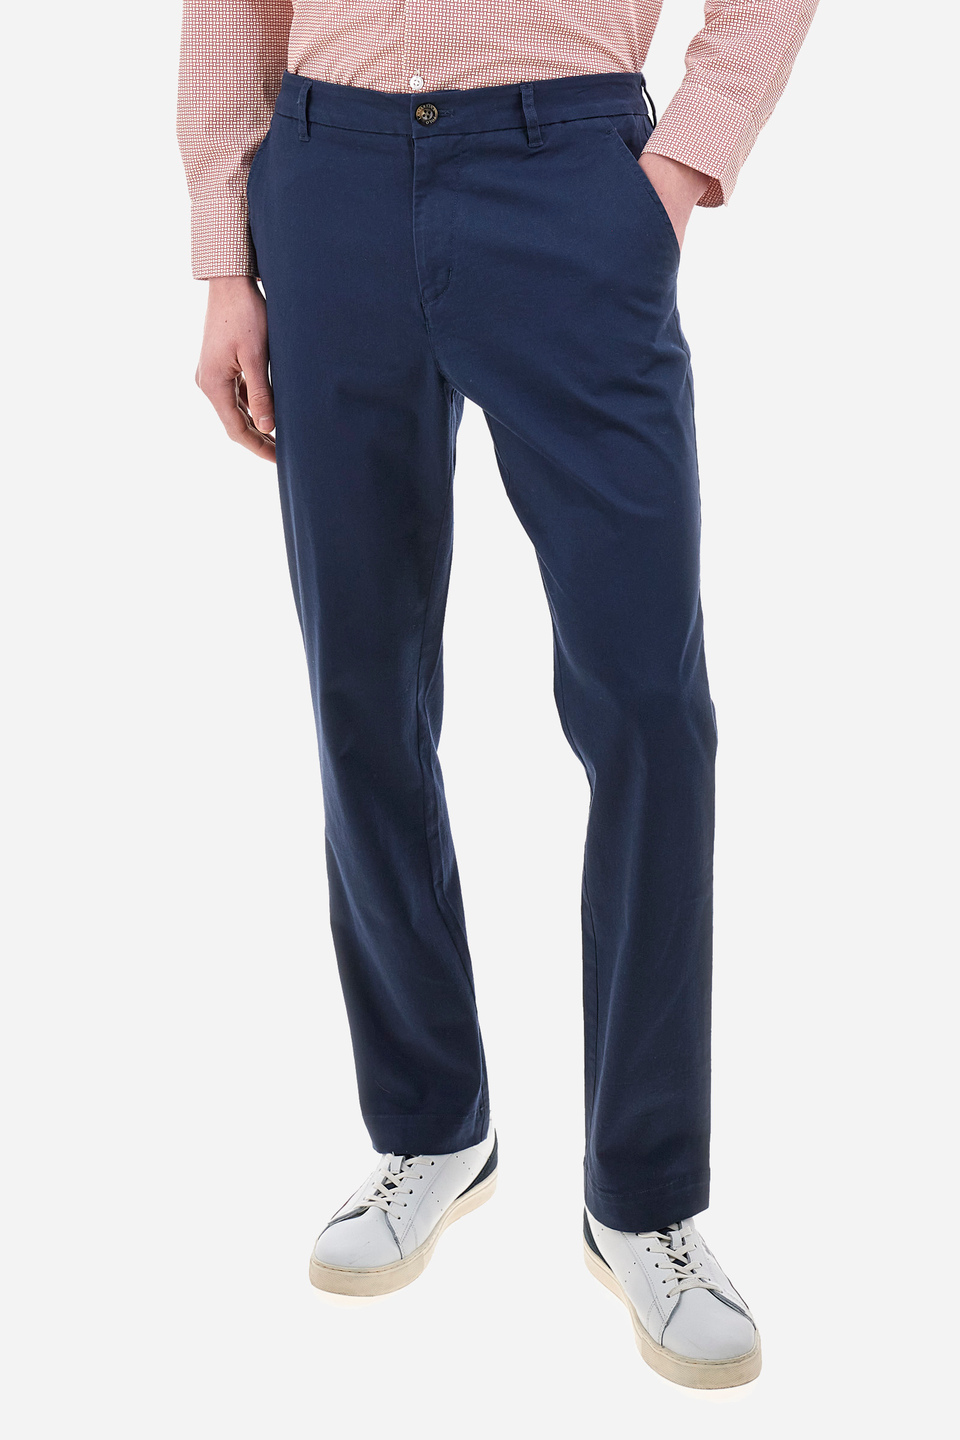 Pantalone chino da uomo regular fit - Yirmeyahu | La Martina - Official Online Shop